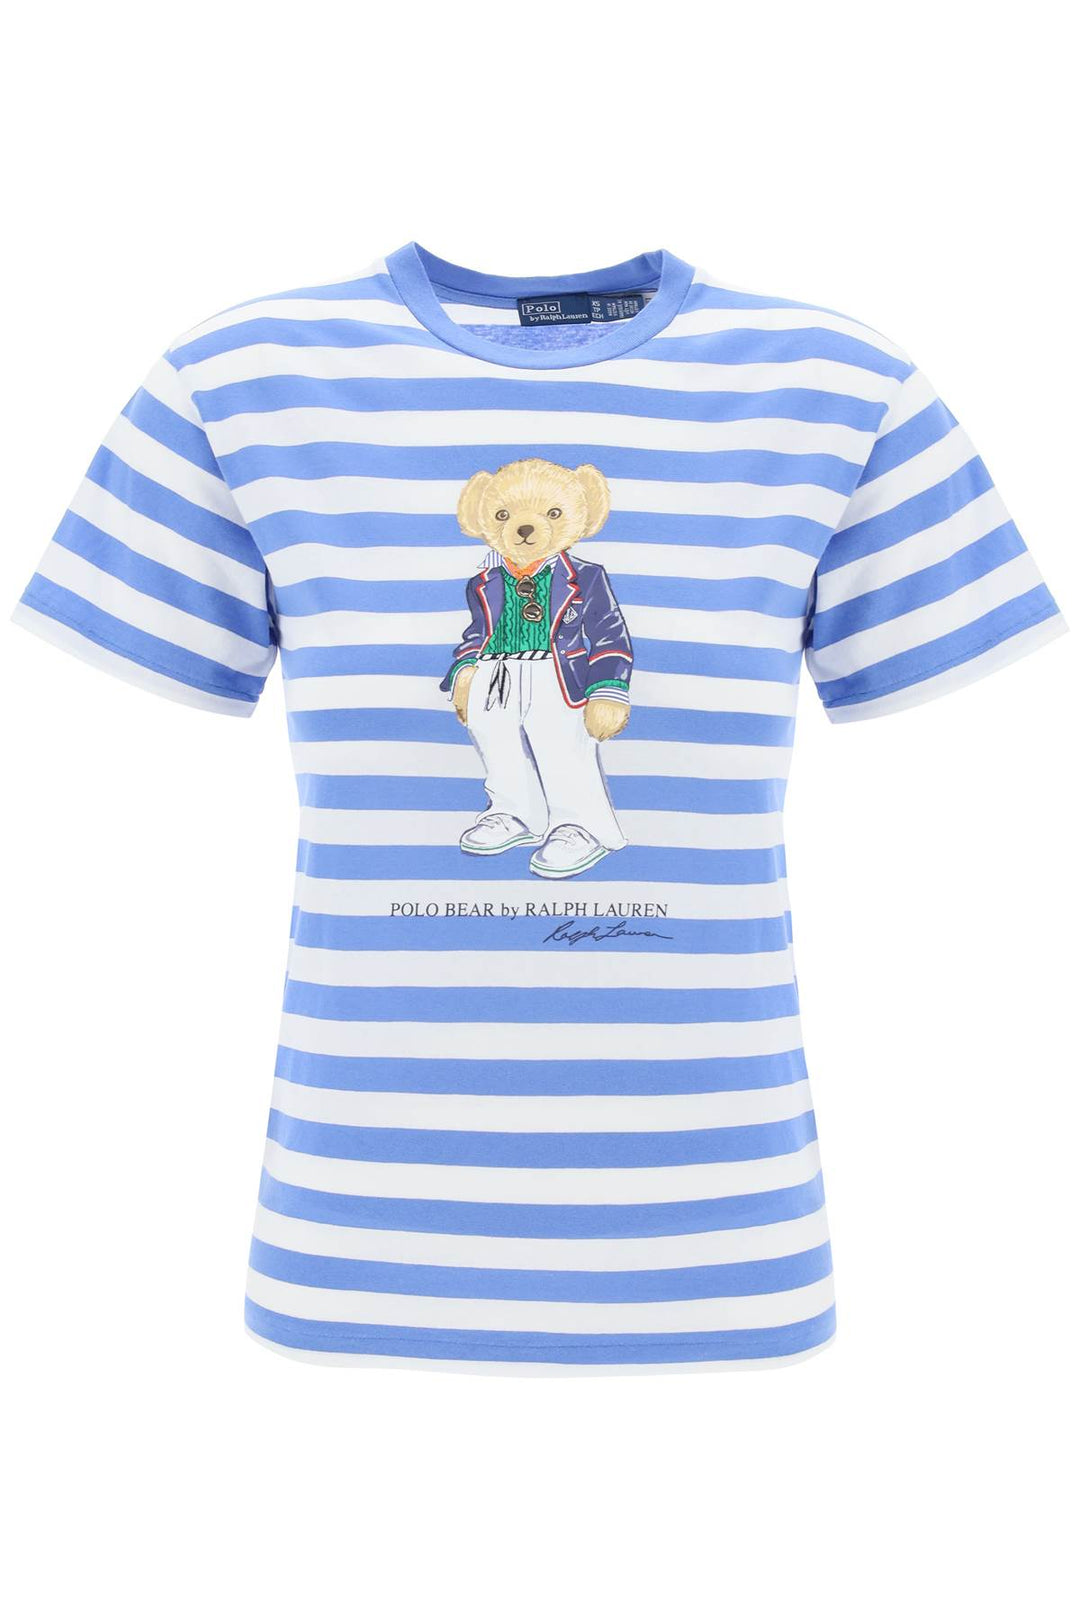 T Shirt A Righe Polo Bear - Polo Ralph Lauren - Donna